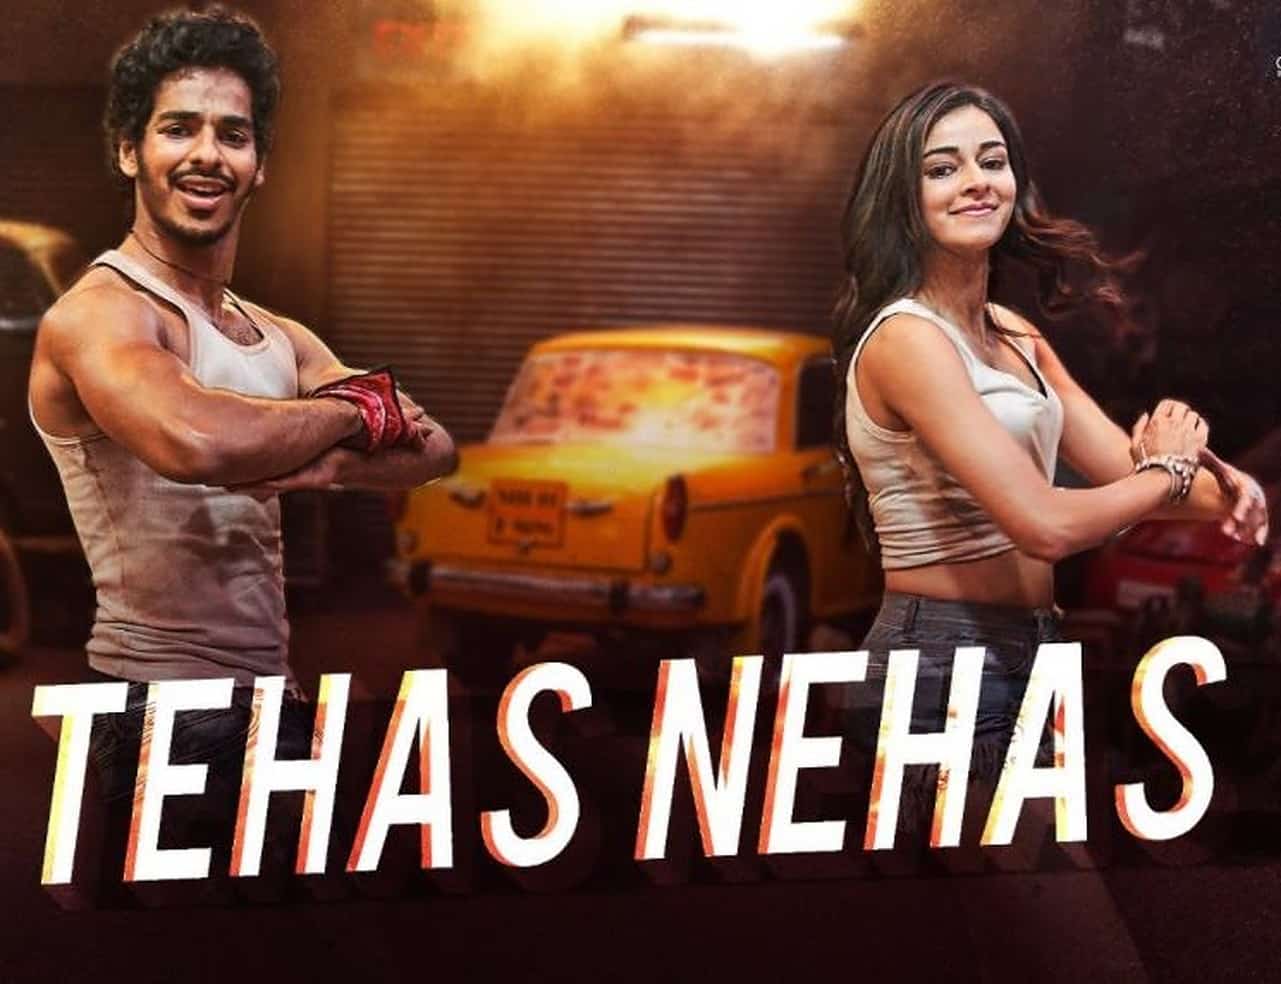 Tehas Nehas Lyrics In Hindi